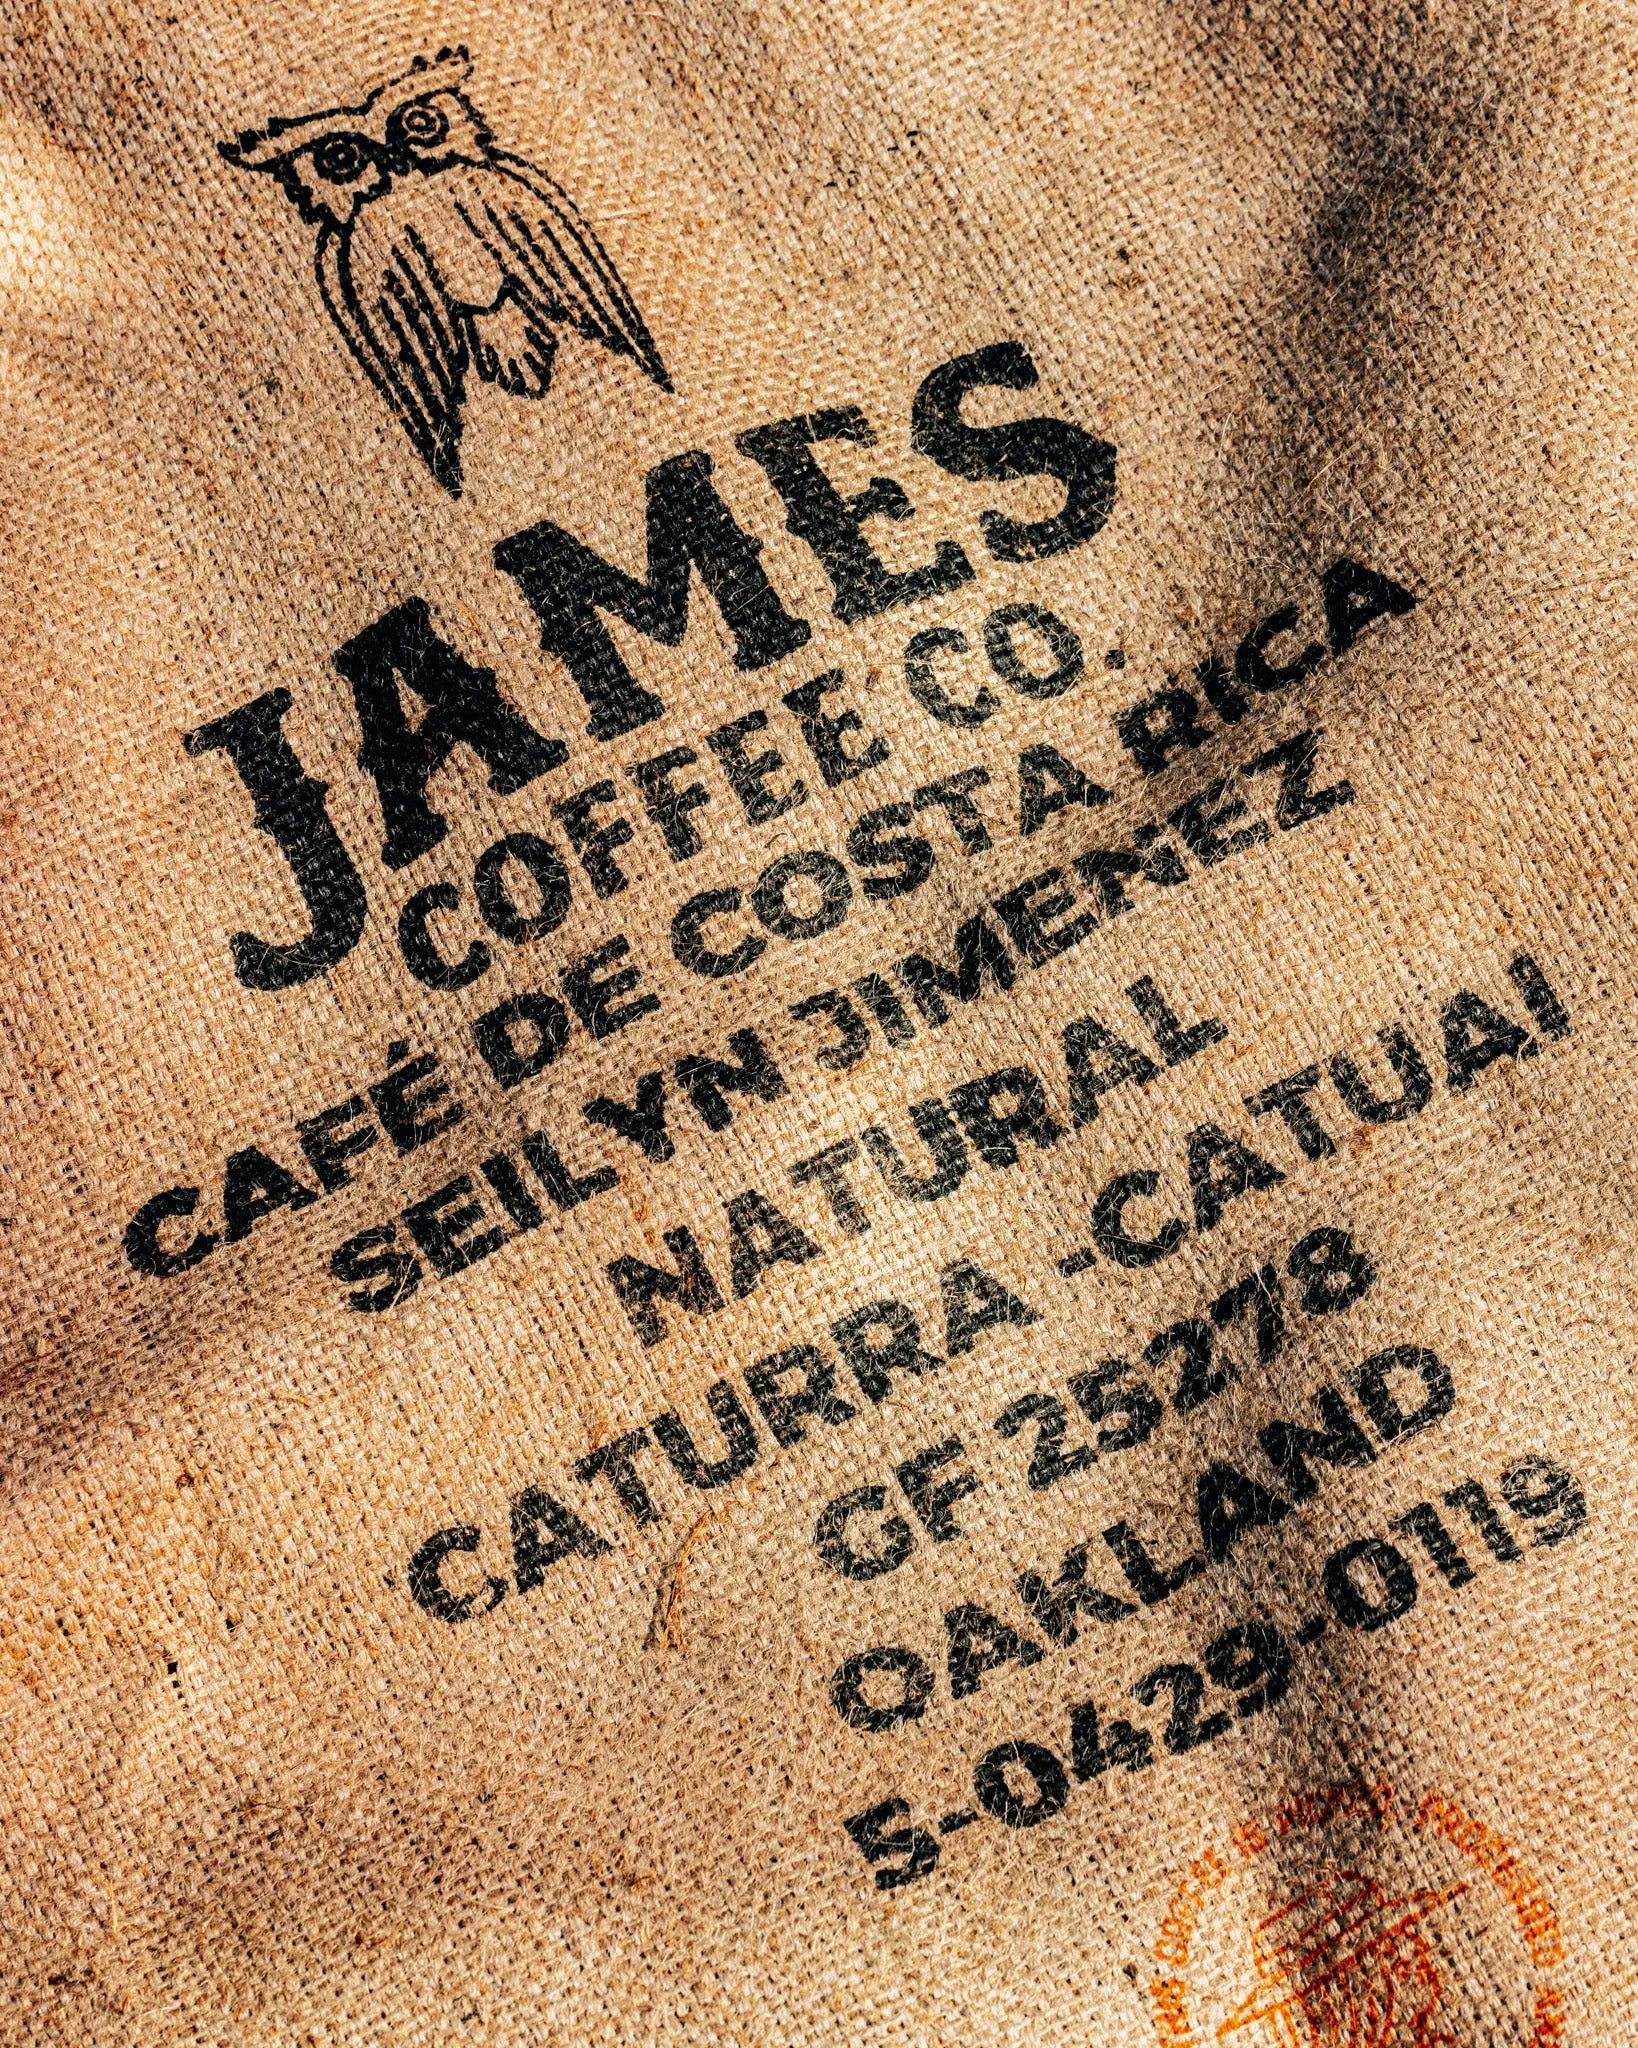 Costa Rica Tarrazu "La Fila" - Direct Trade James Coffee Co.